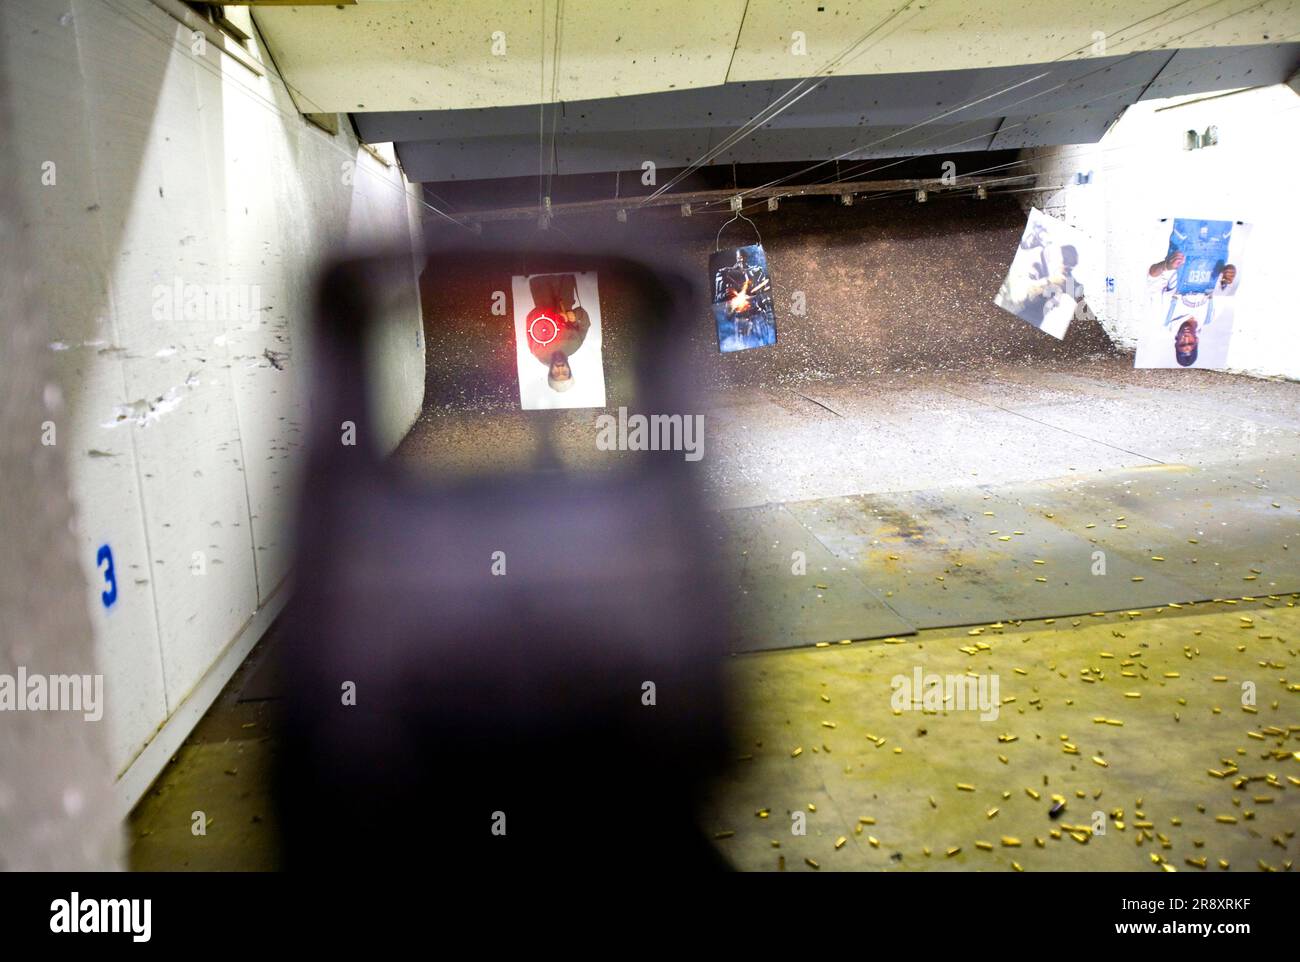 Looking down the barrel of a gun at an Osama Bin Laden target, Las Vegas, Nevada. Stock Photo